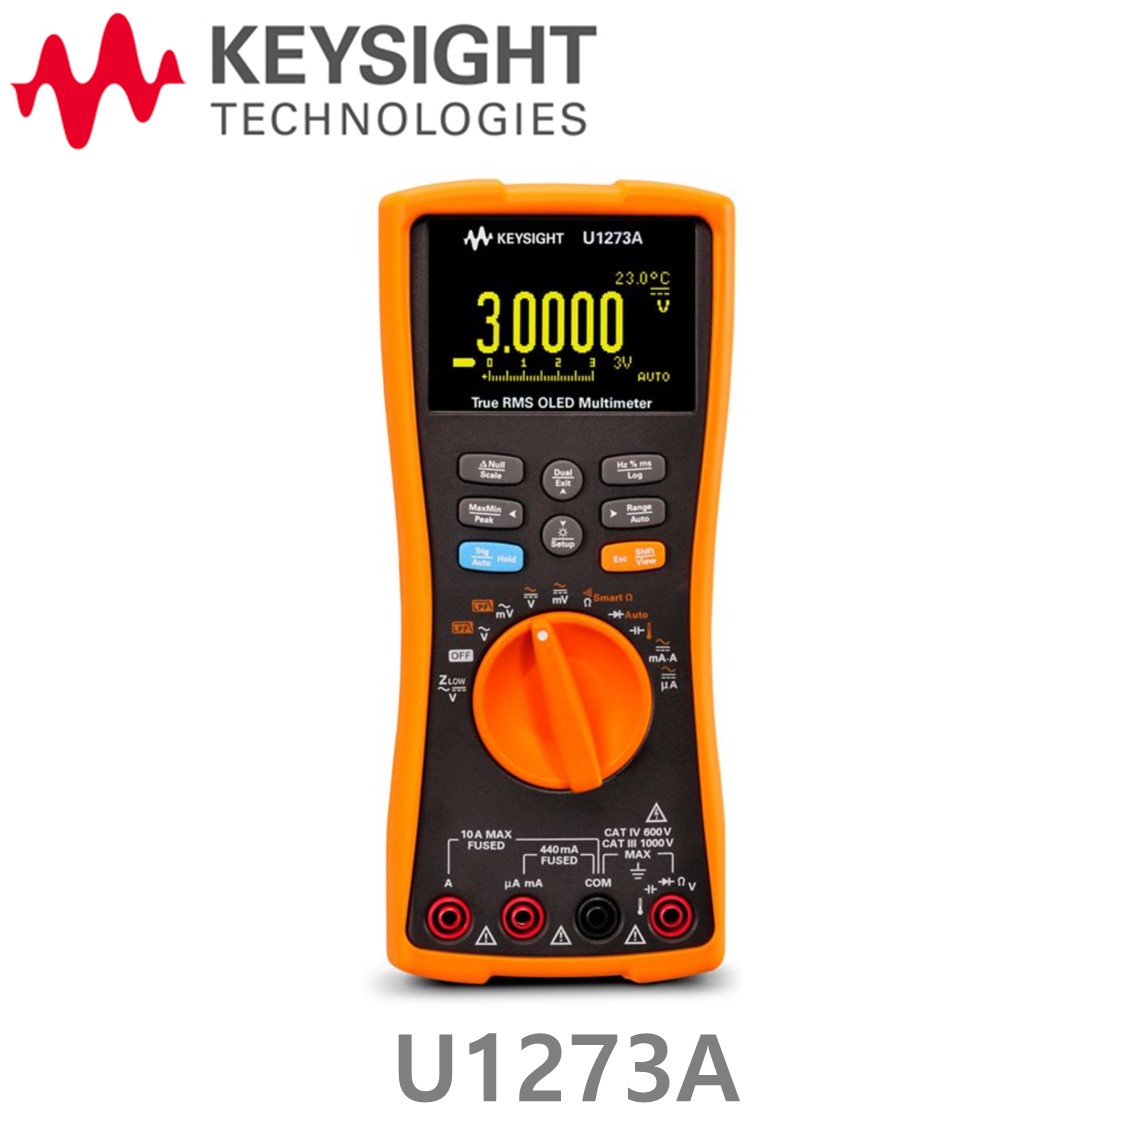 [ KEYSIGHT U1273A ] 키사이트 4.5디지트 핸드형 디지털 멀티미터( OLED 디스플레이, 방수,방진 IP54 )